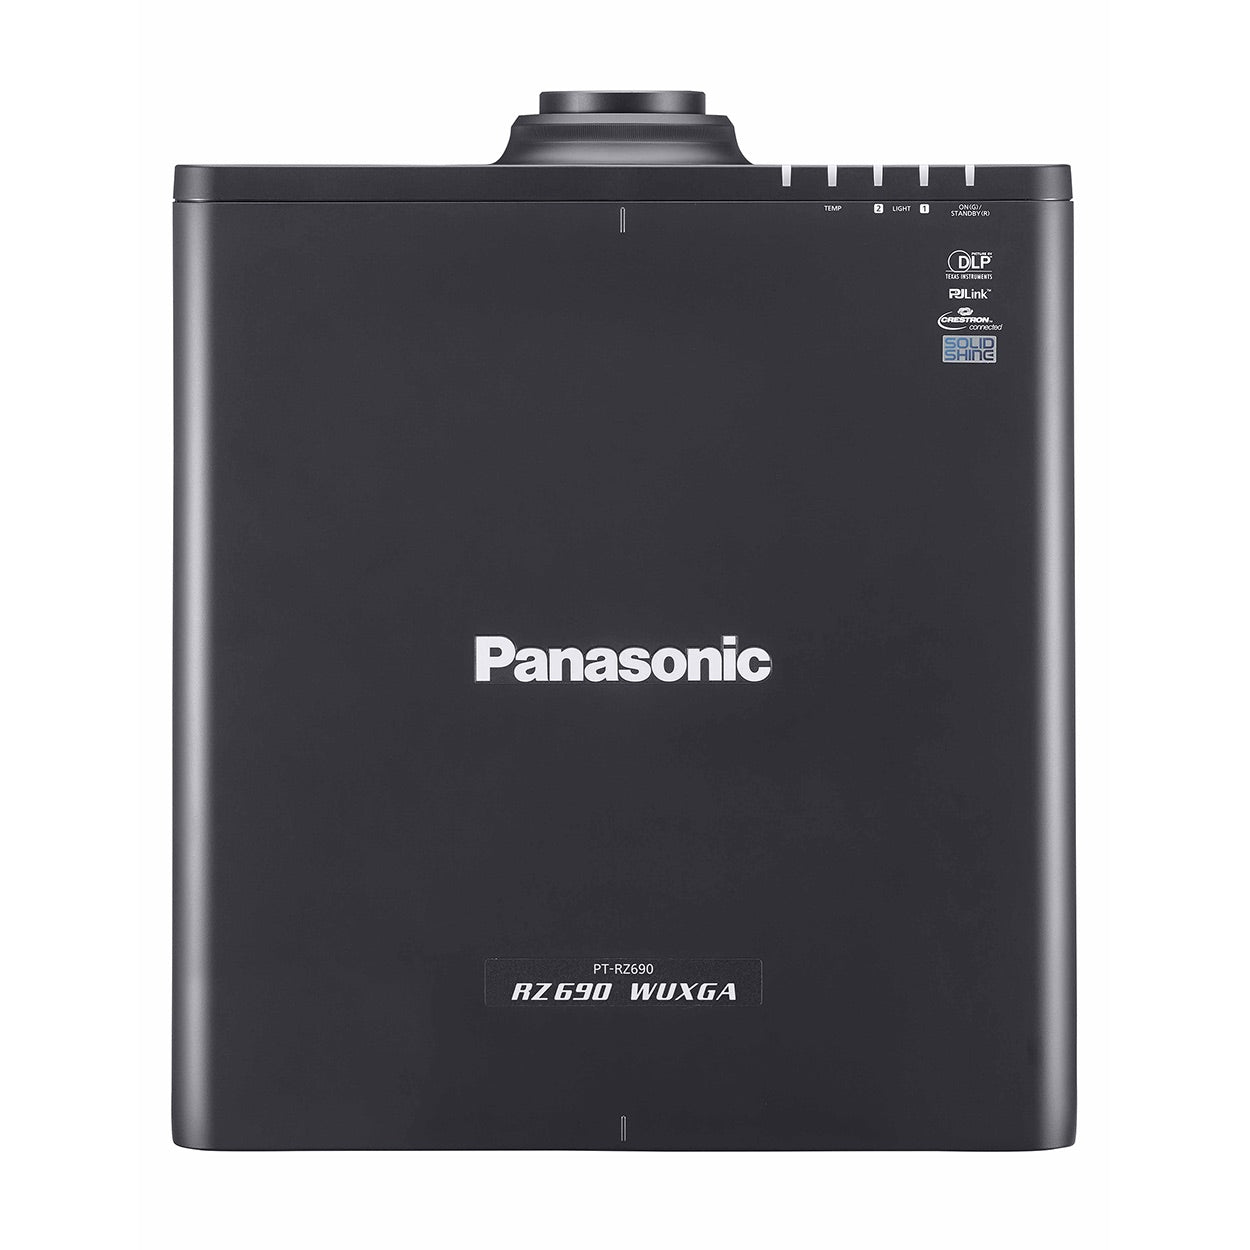 Panasonic PT-RZ690BU - 1-Chip DLP WUXGA Laser Projector, black, top